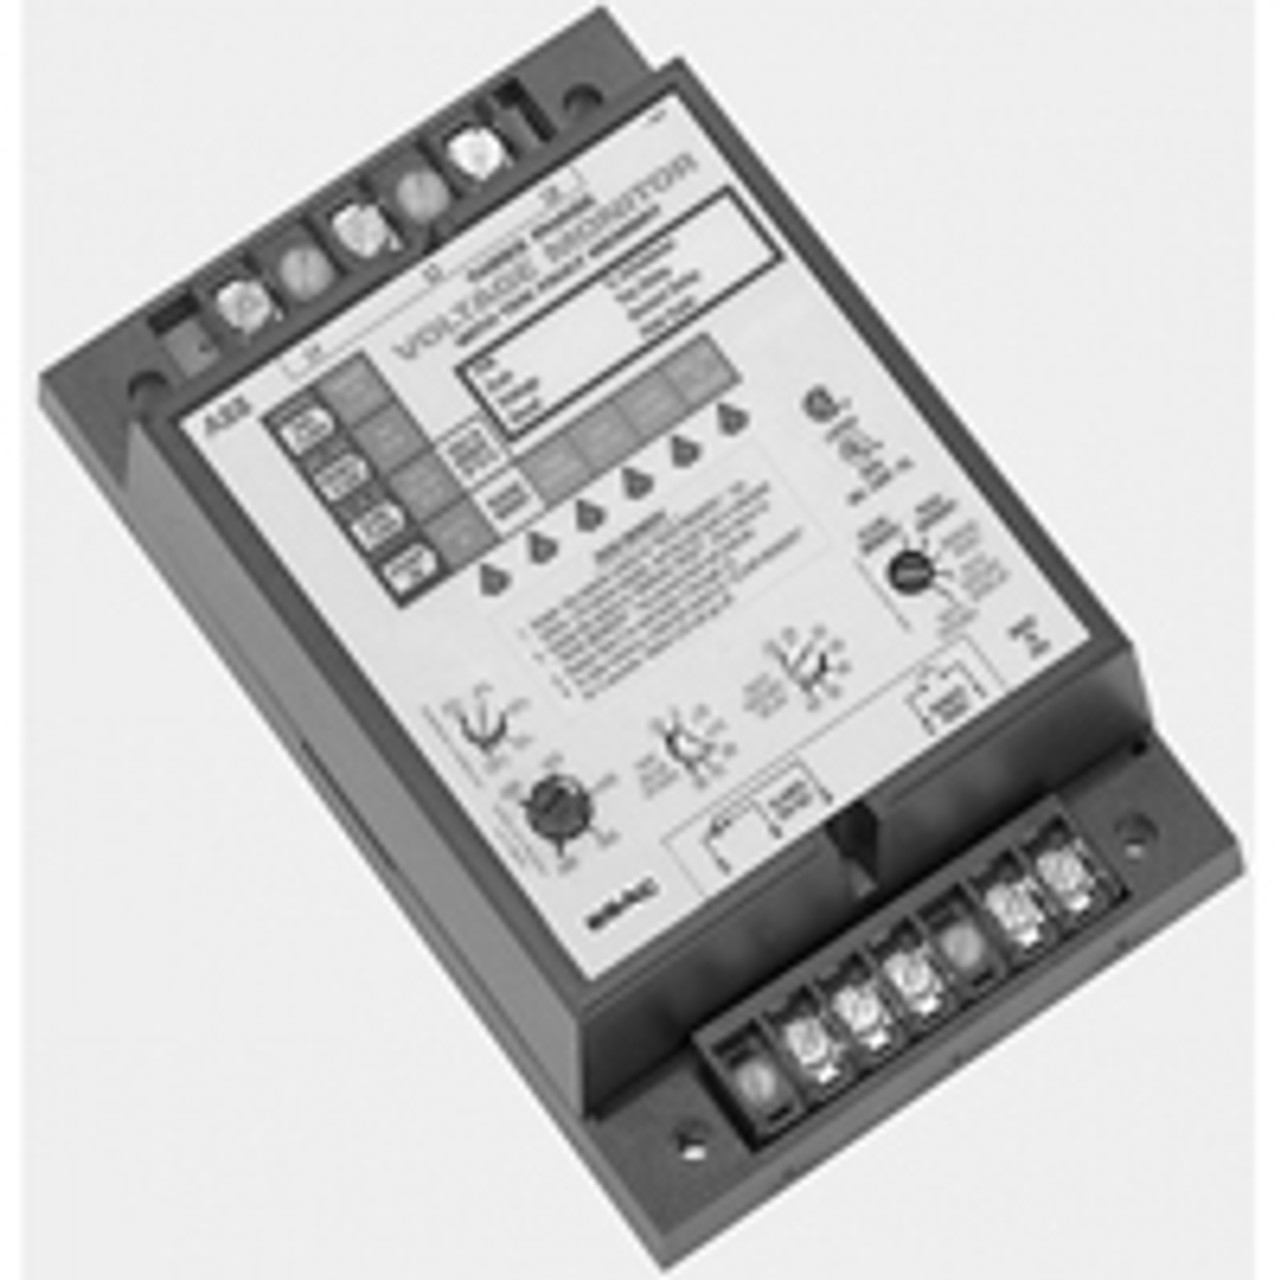 Littlefuse SSAC WVM911AL Voltage Monitor Relays